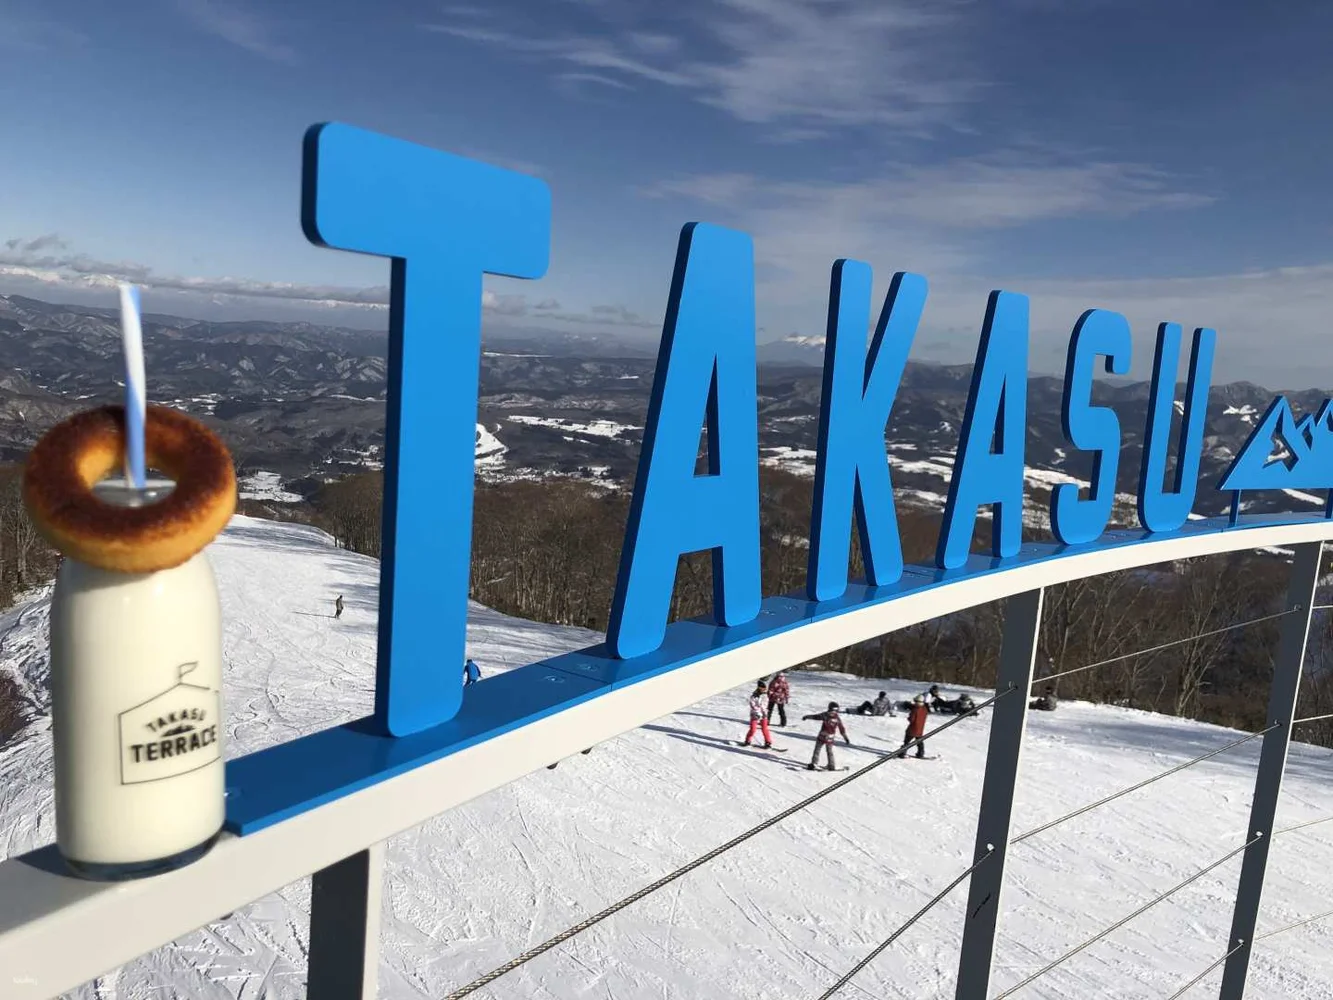 Takasu Snow Park 1-Day Ski Trip from Nagoya or Takayama